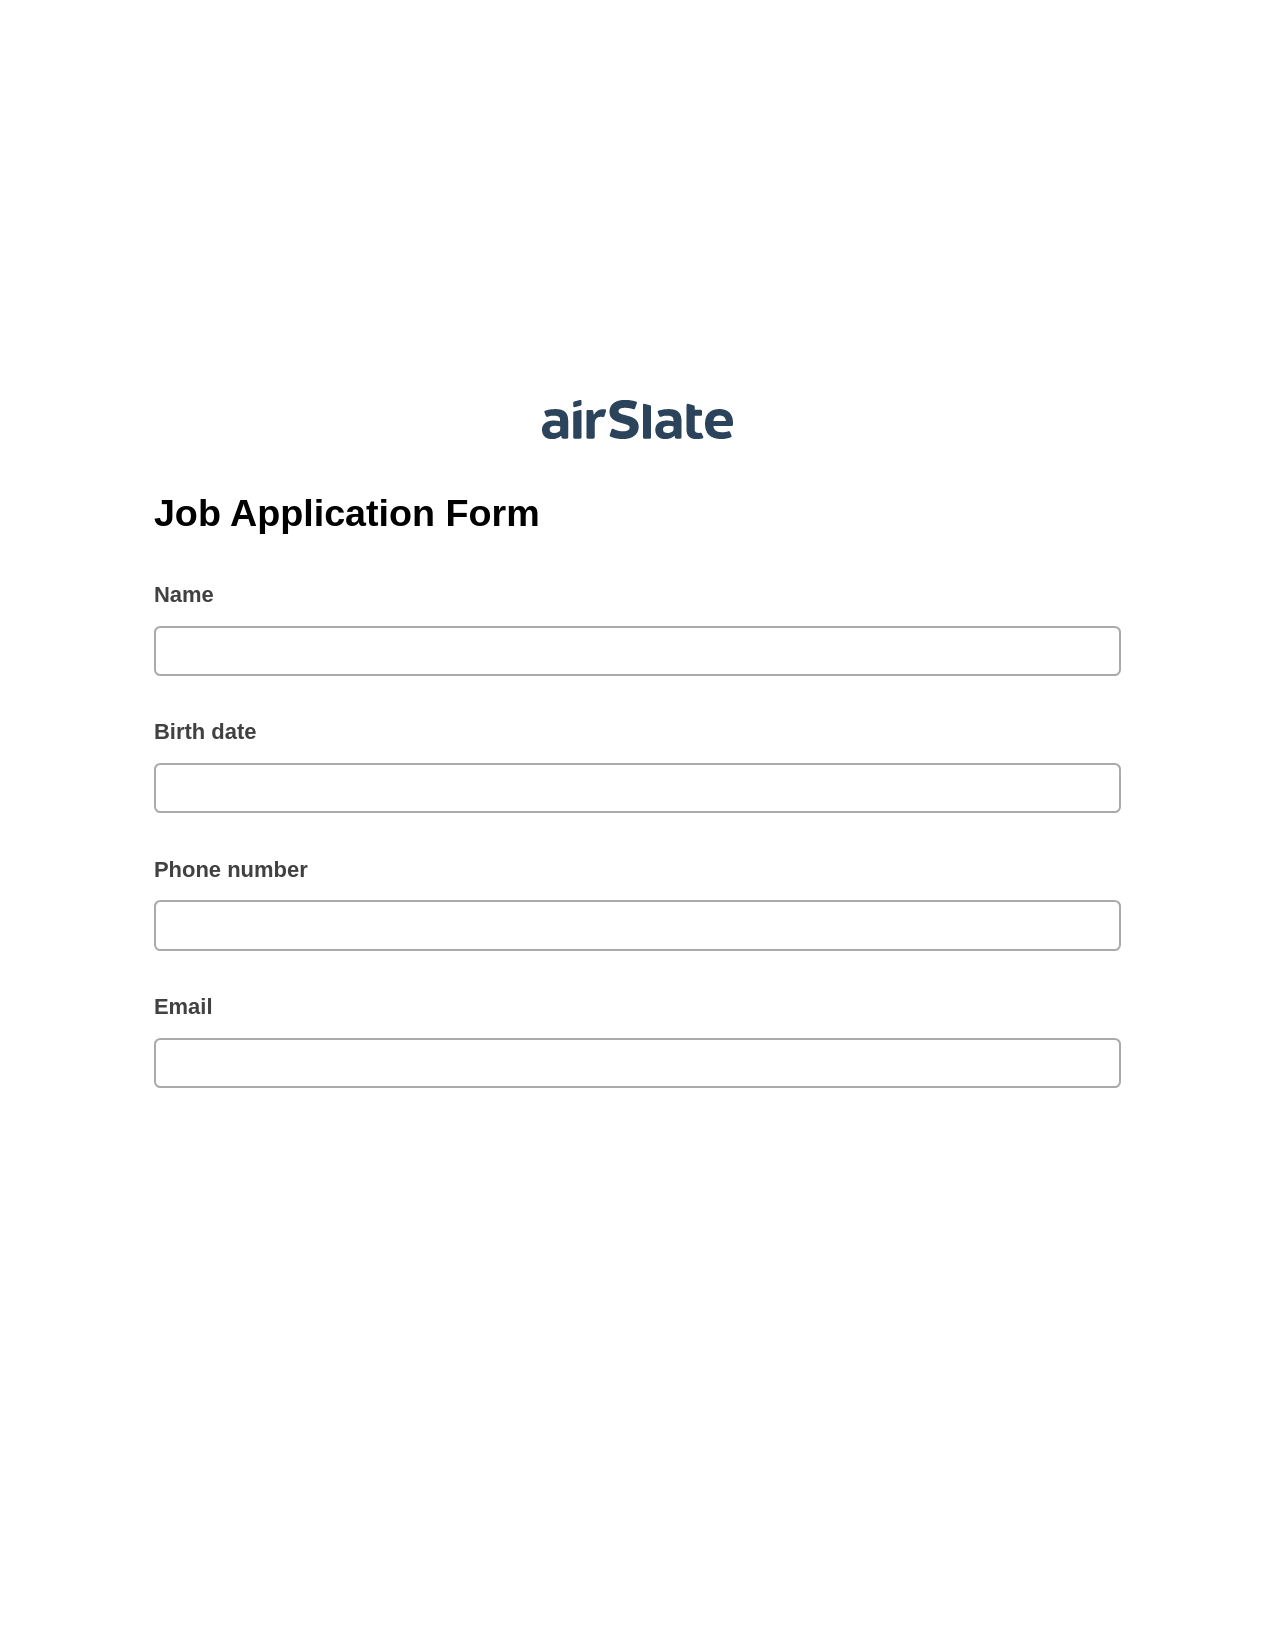 Multirole Job Application Form Pre-fill Dropdowns from Smartsheet Bot, Update Salesforce Record Bot, Slack Notification Postfinish Bot